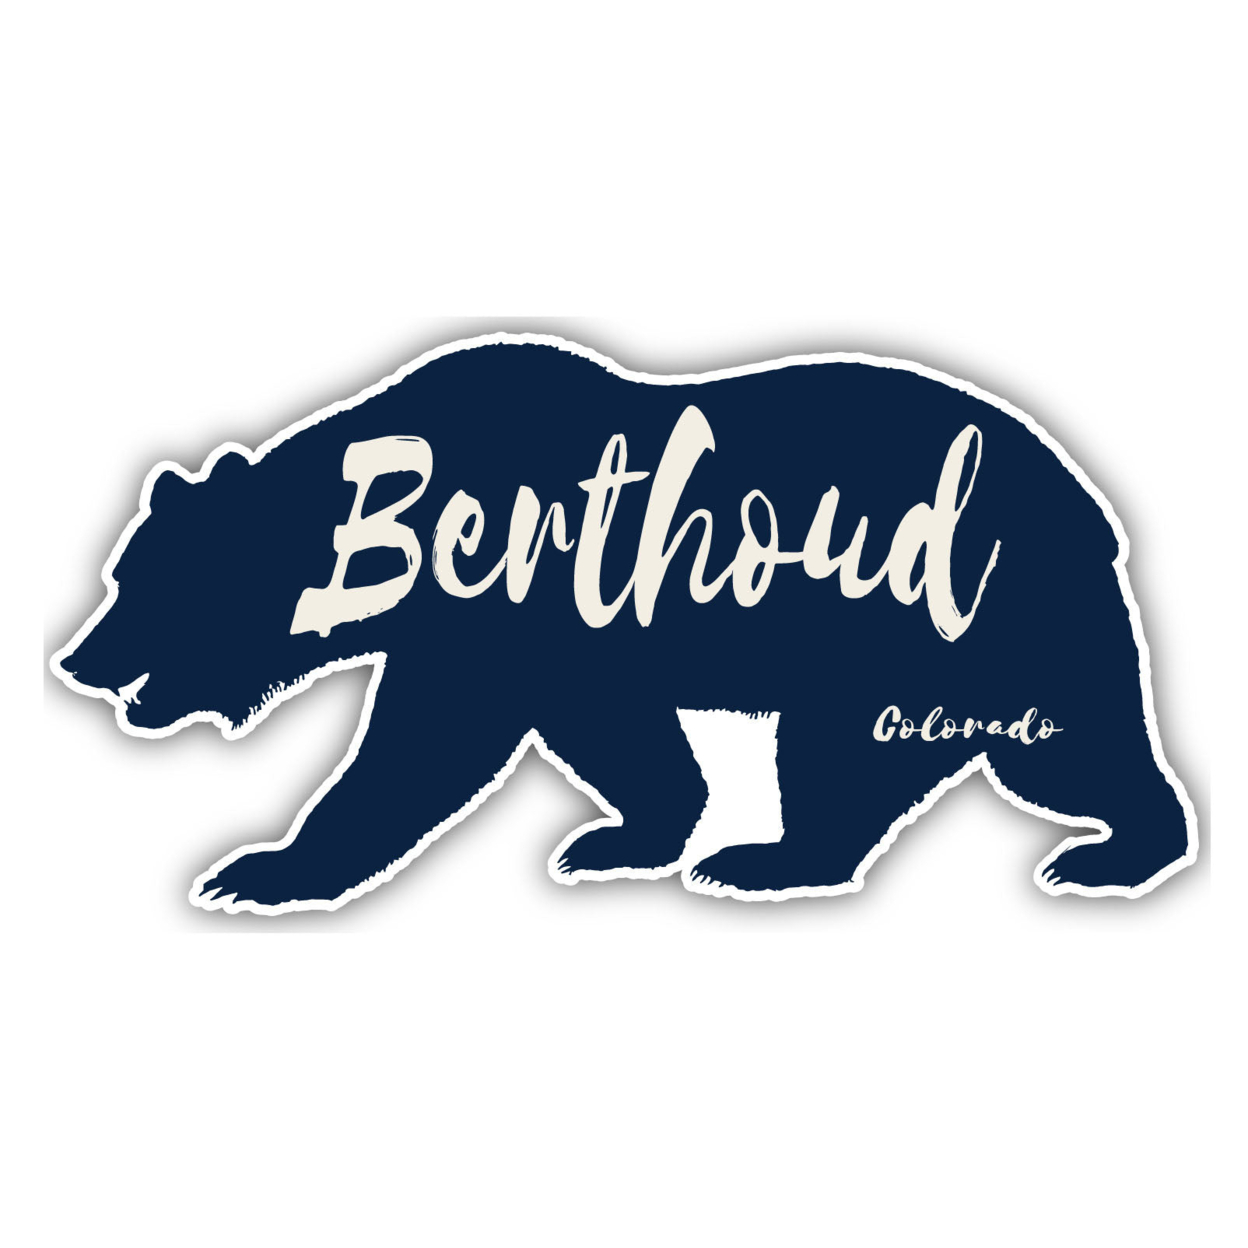 Berthoud Colorado Souvenir Decorative Stickers (Choose Theme And Size) - 4-Pack, 8-Inch, Bear